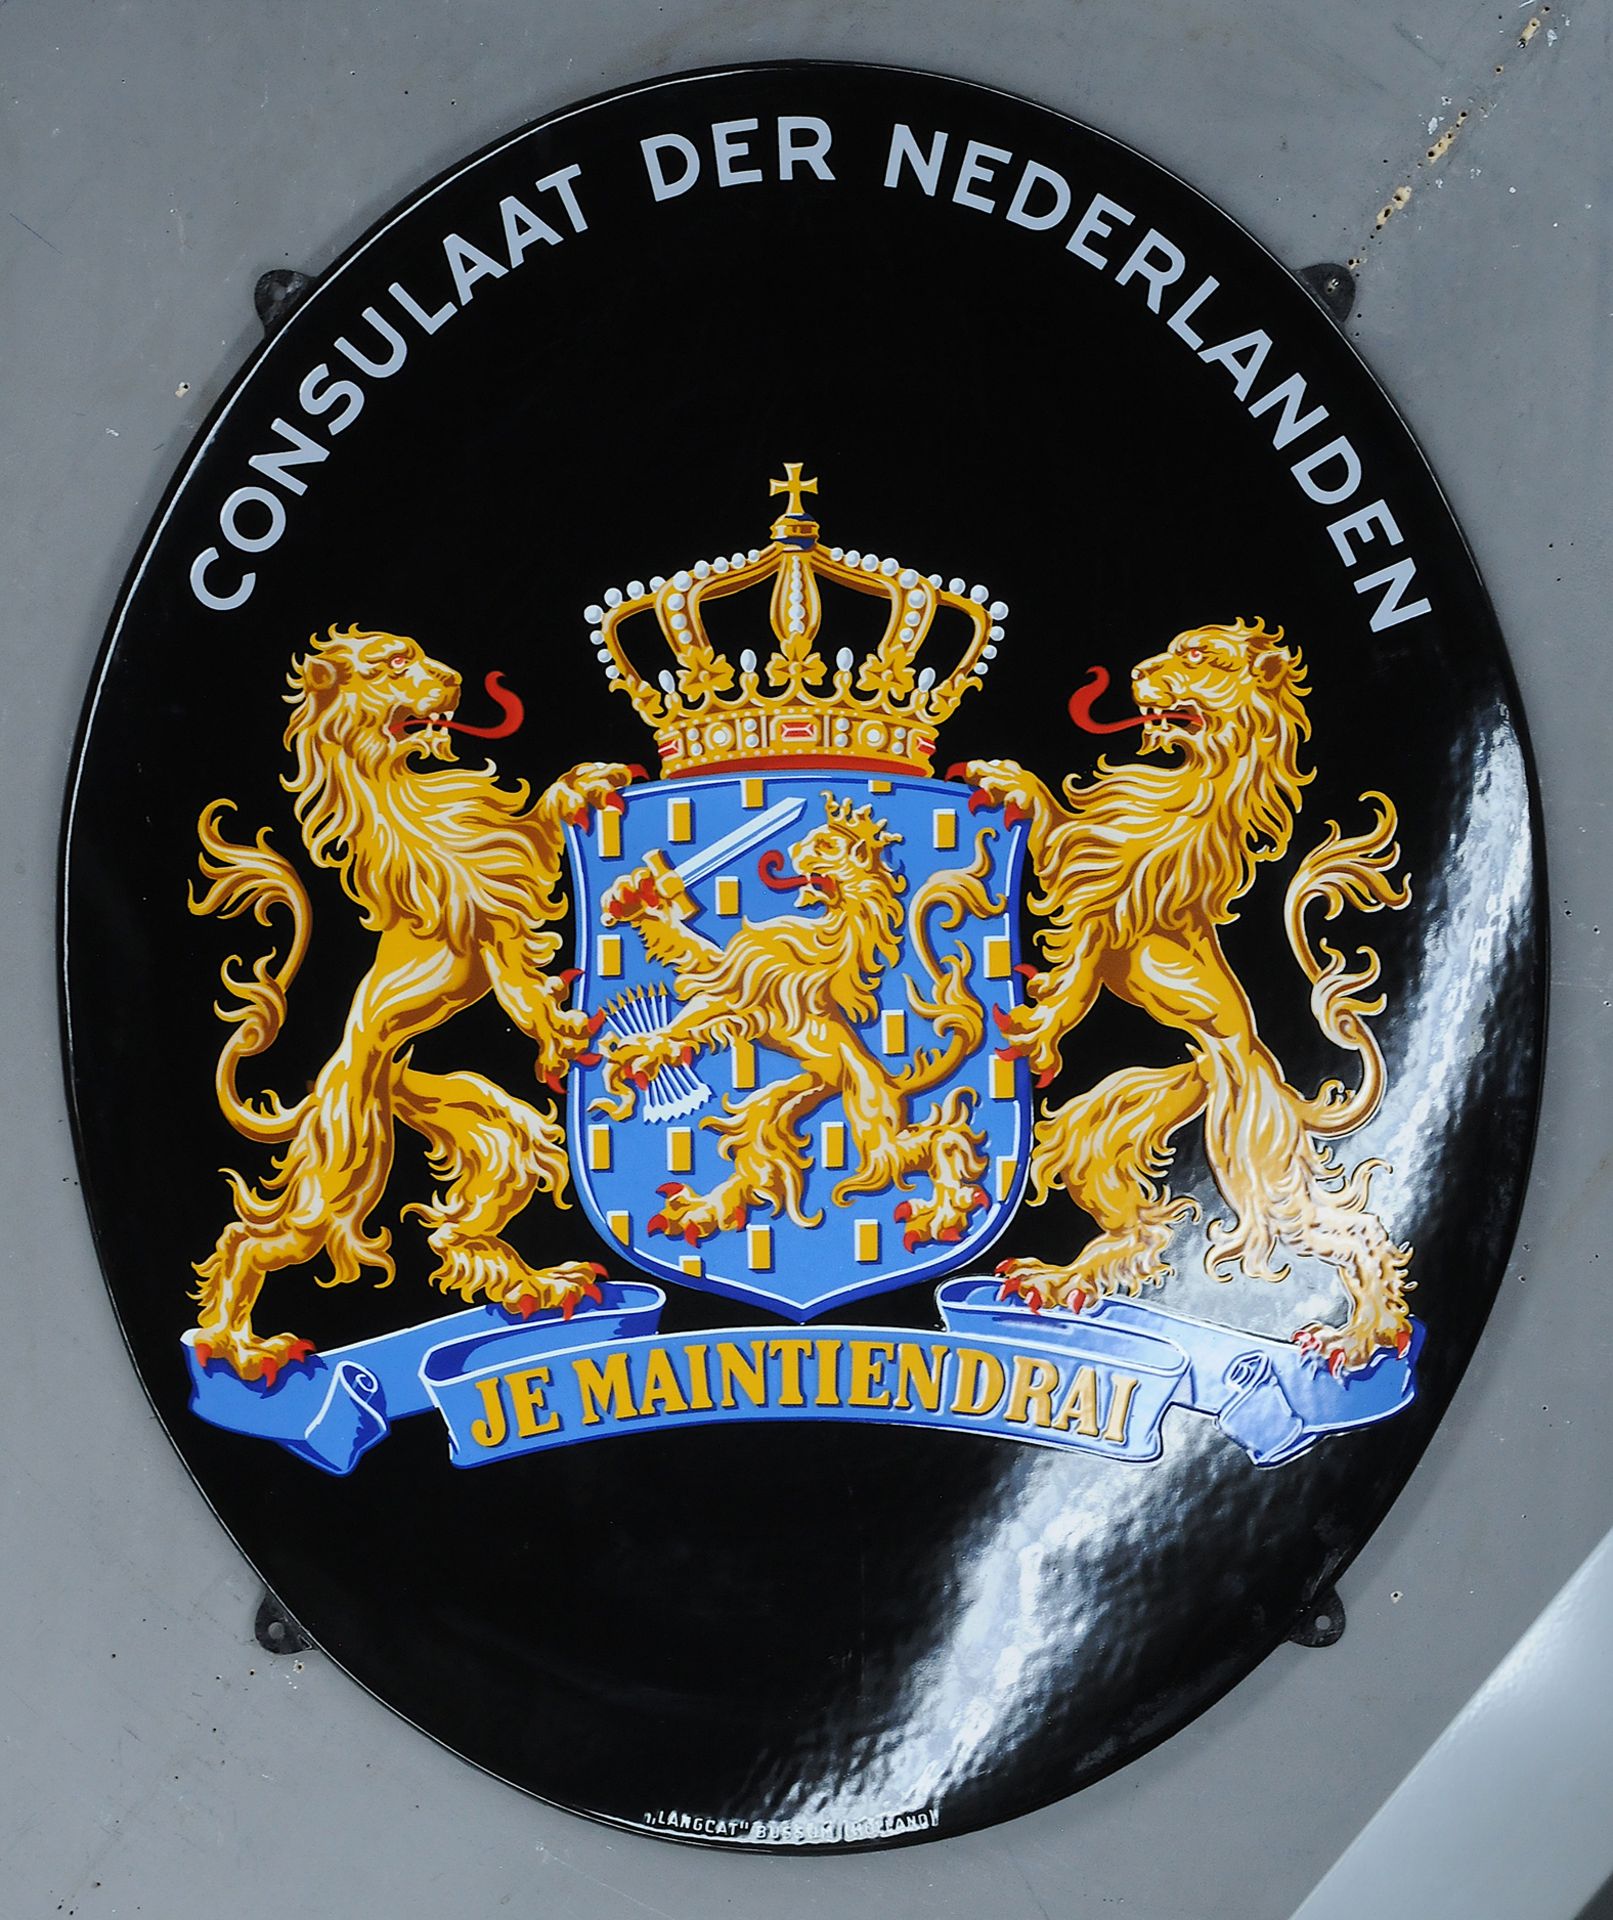 Consulaat der Nederlanden - Image 3 of 3